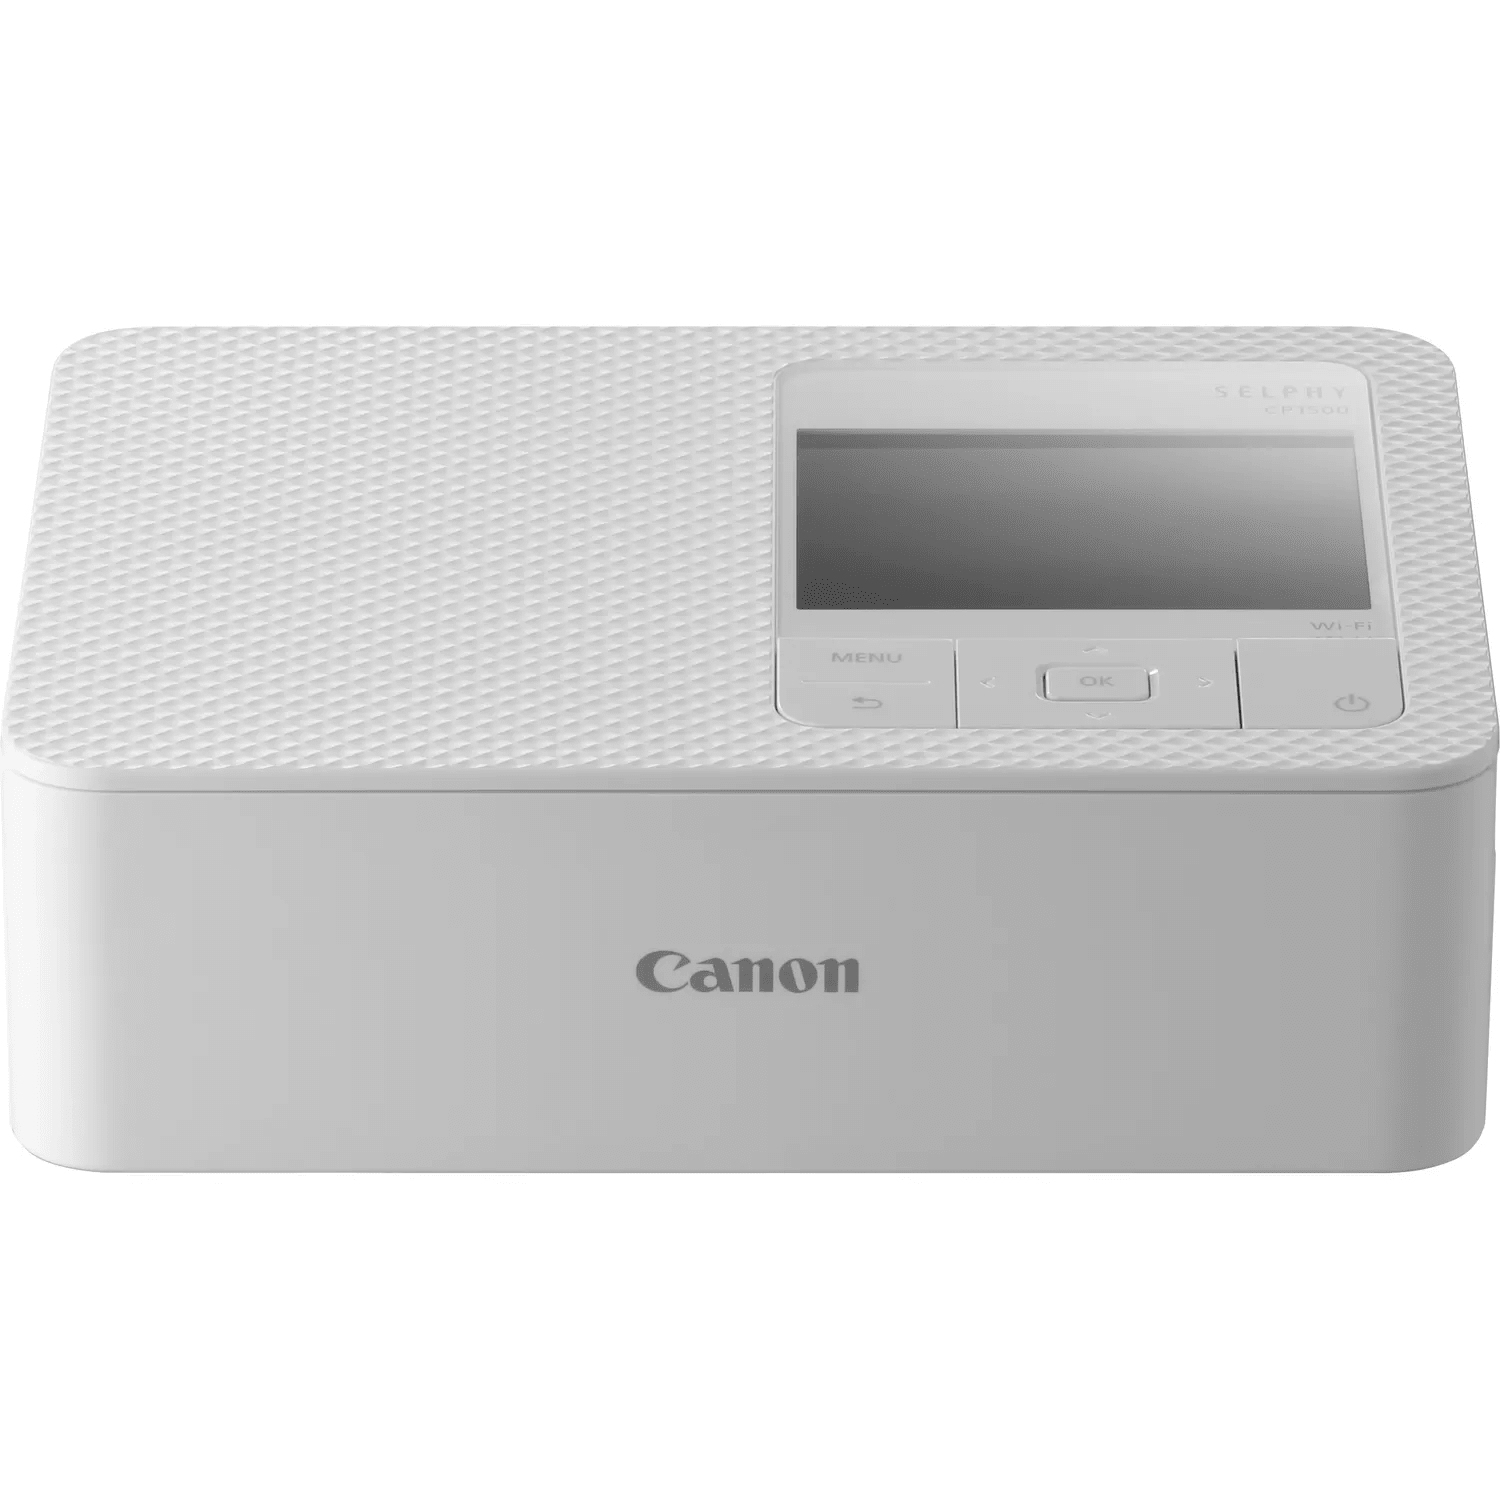 Canon CP1500